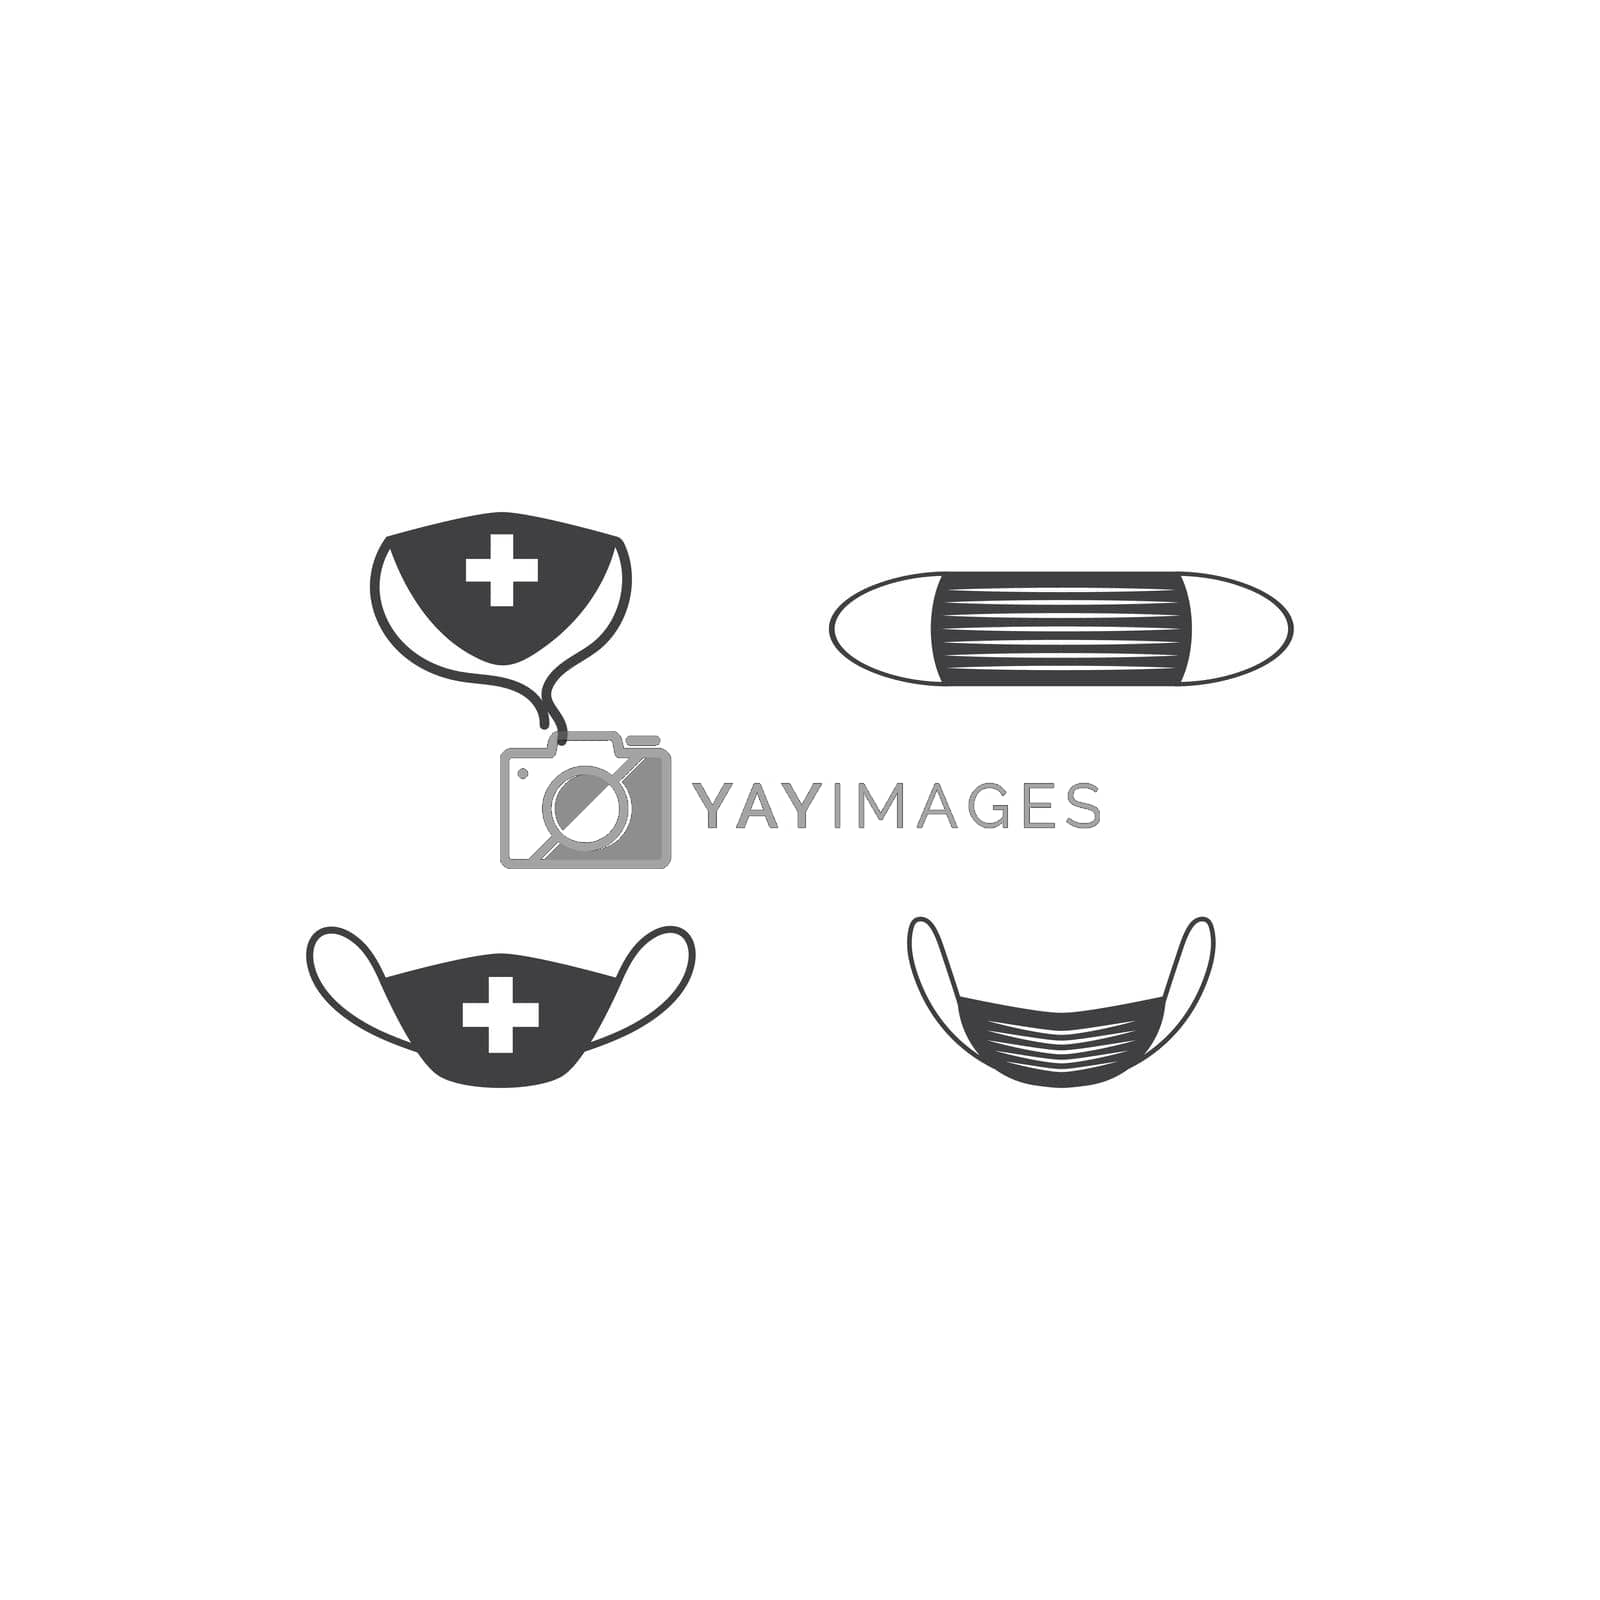 Dentist mask icon vector illustration